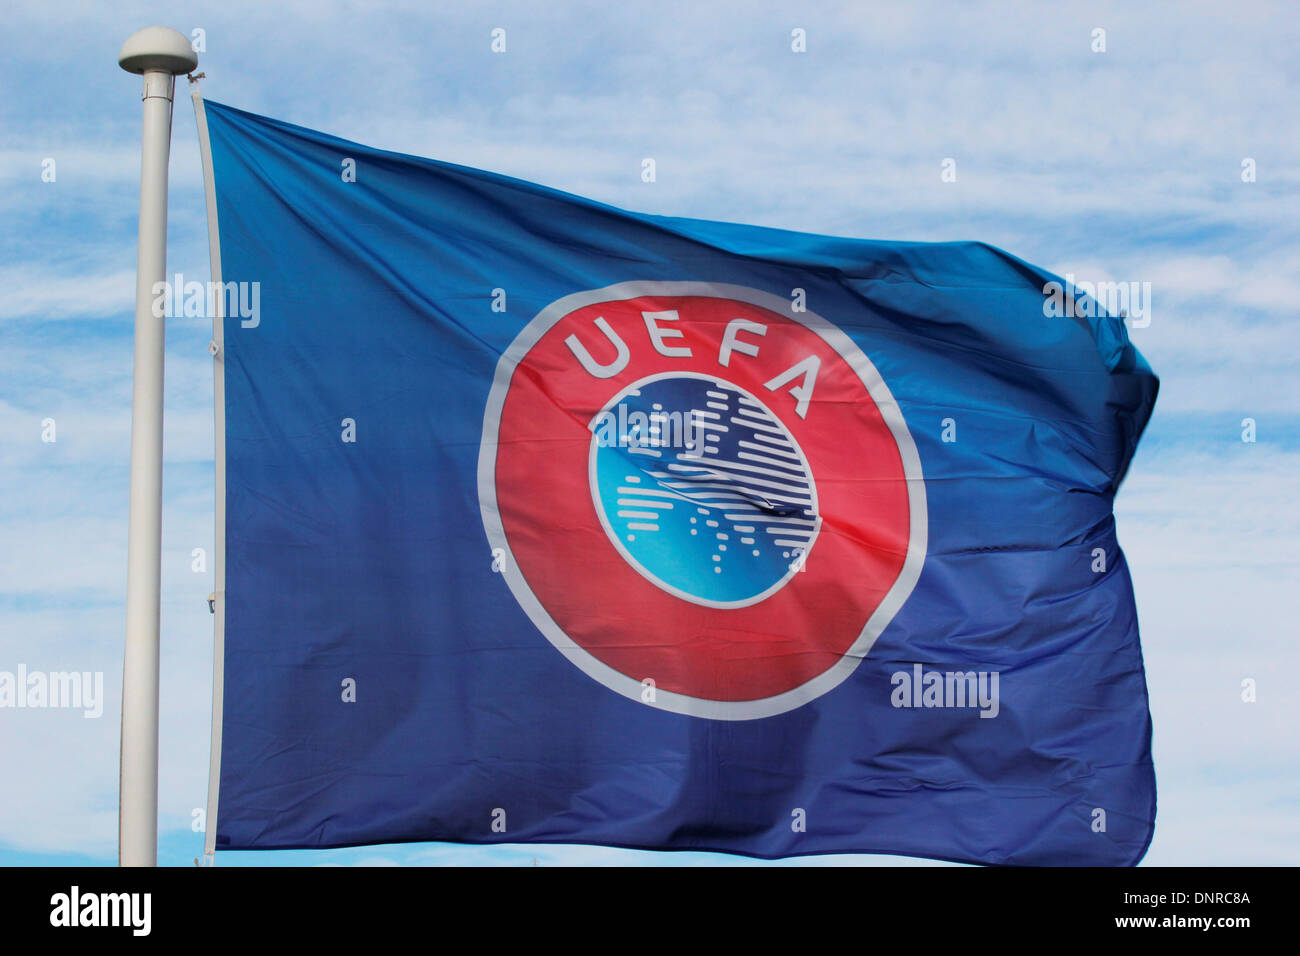 UEFA-Flagge und Wappen Stockfoto